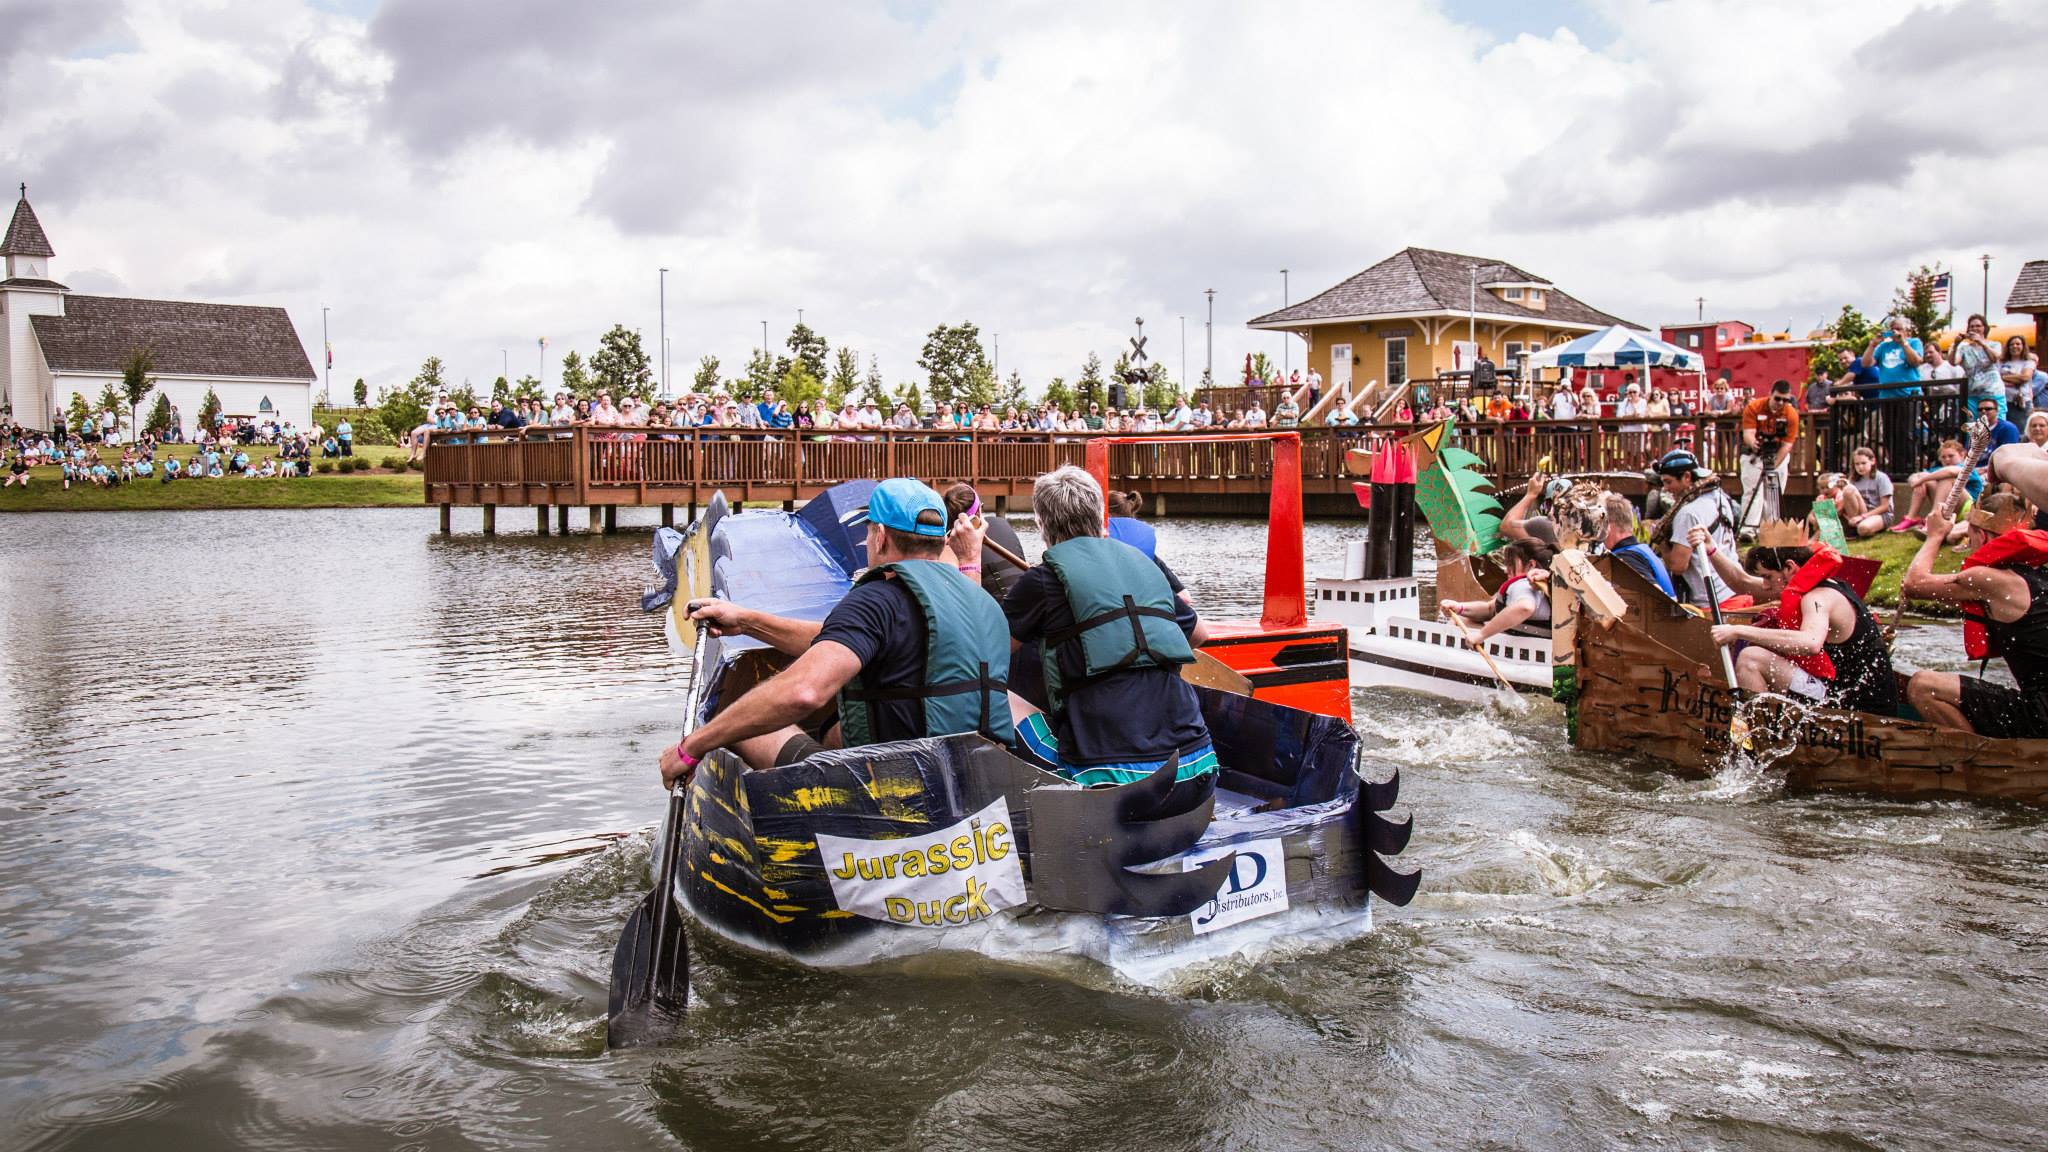 Cardboard Boat Regatta May 14, 2022 - Discovery Park of America